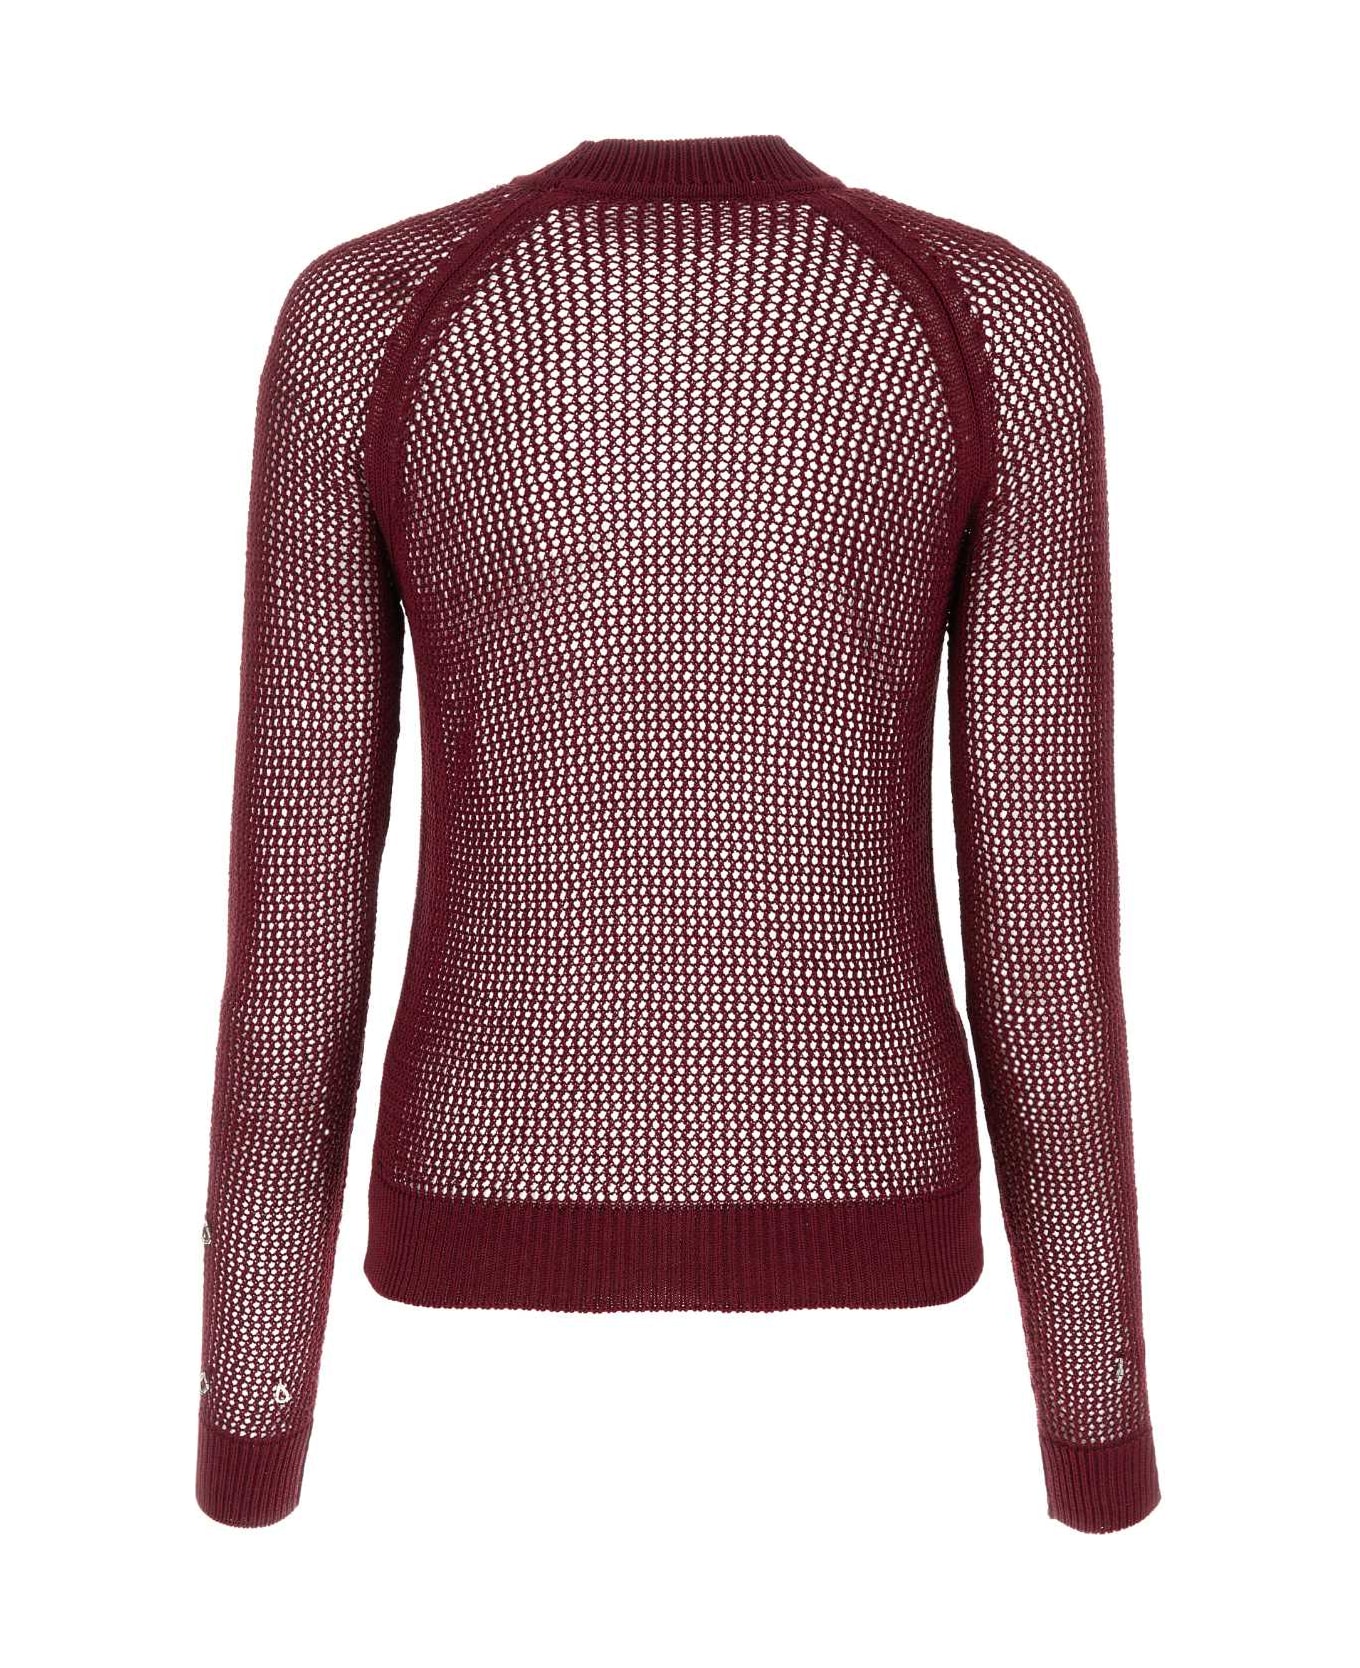 Durazzi Milano Burgundy Cotton Sweater - Red